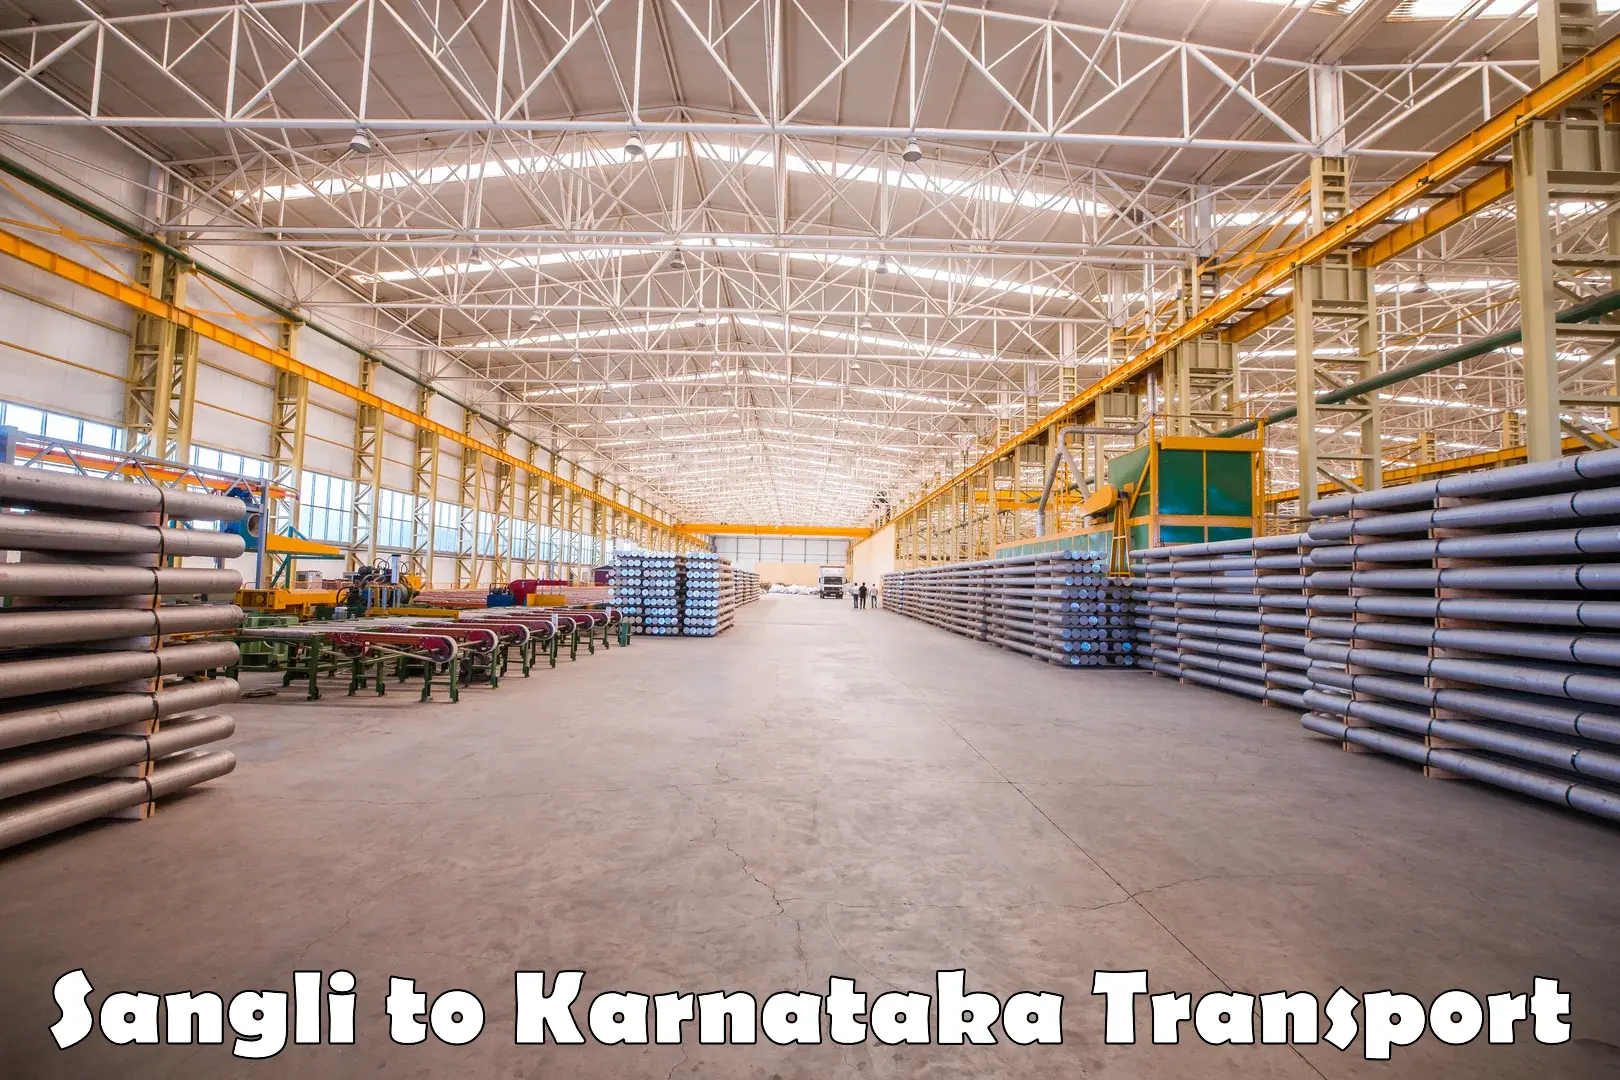 Delivery service Sangli to Karnataka